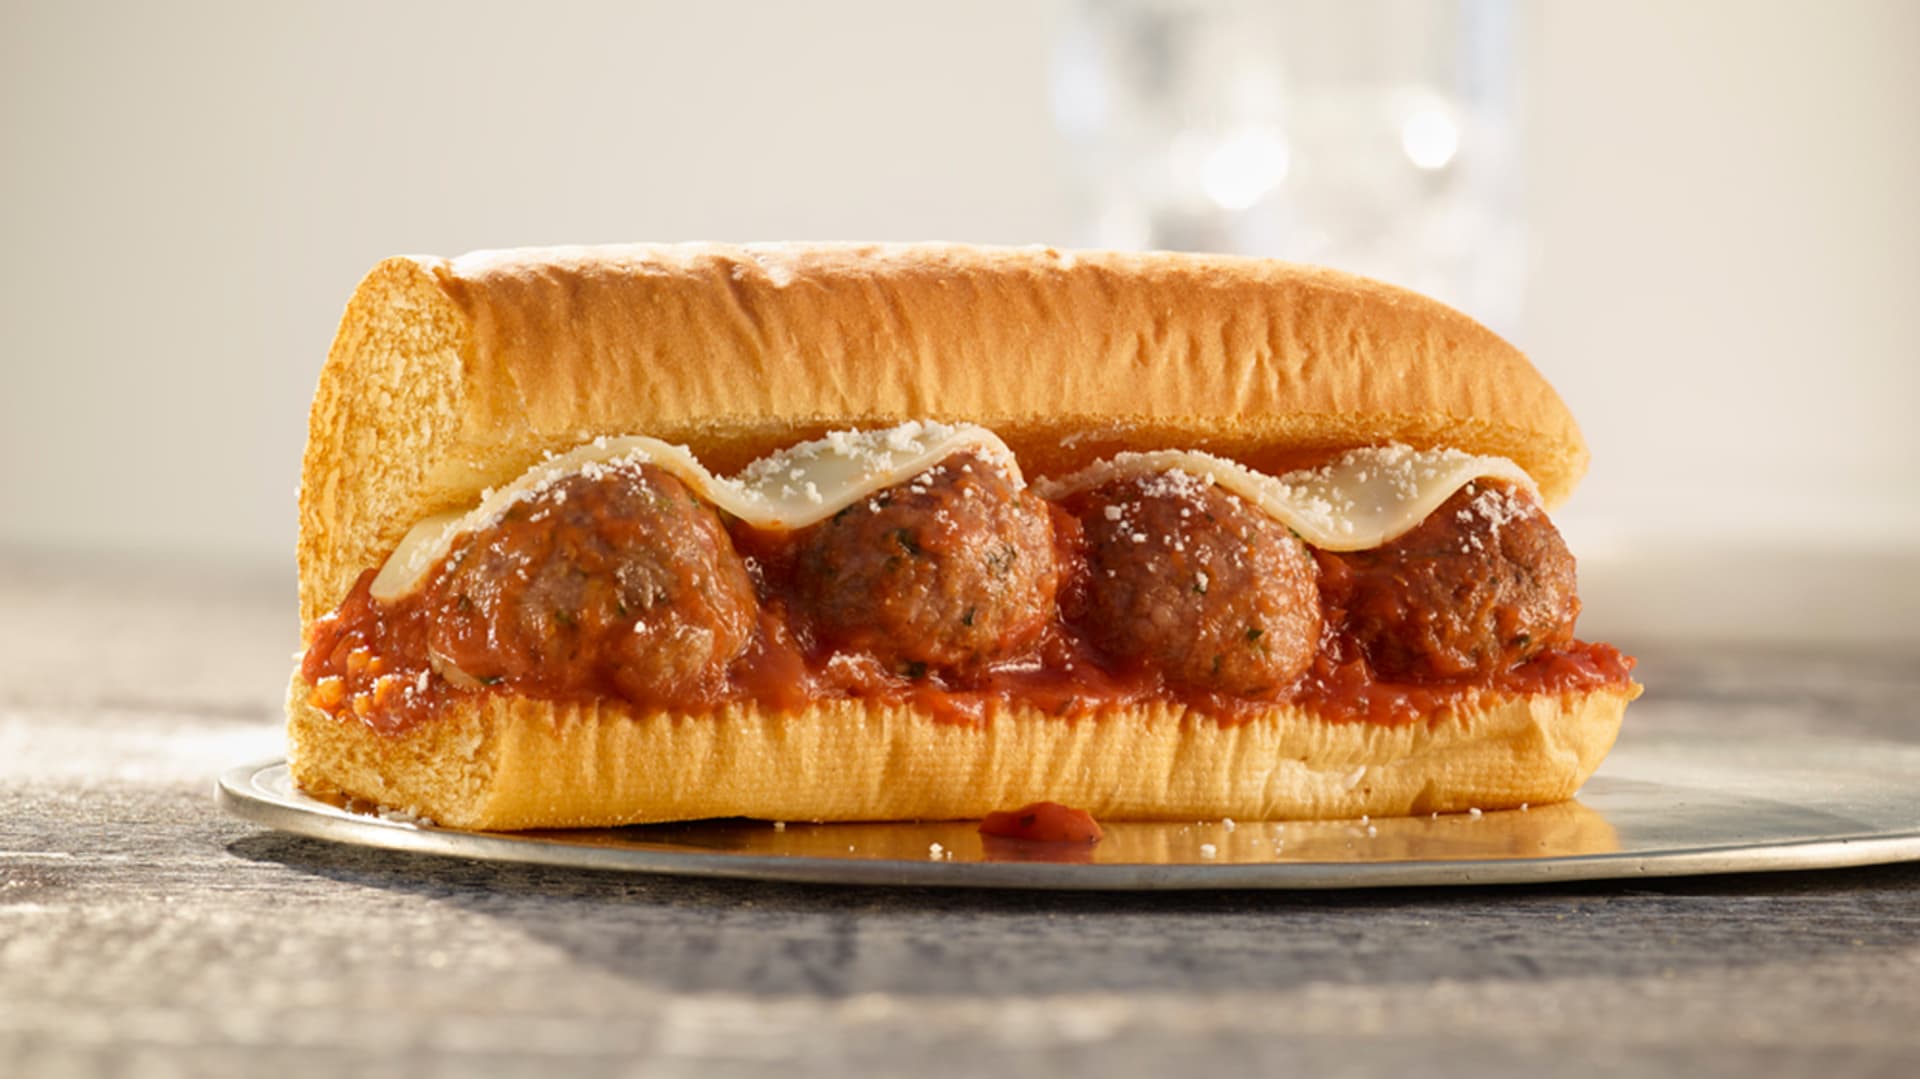 Subway is testing a Beyond Meat plant-based meatball marinara sandwich